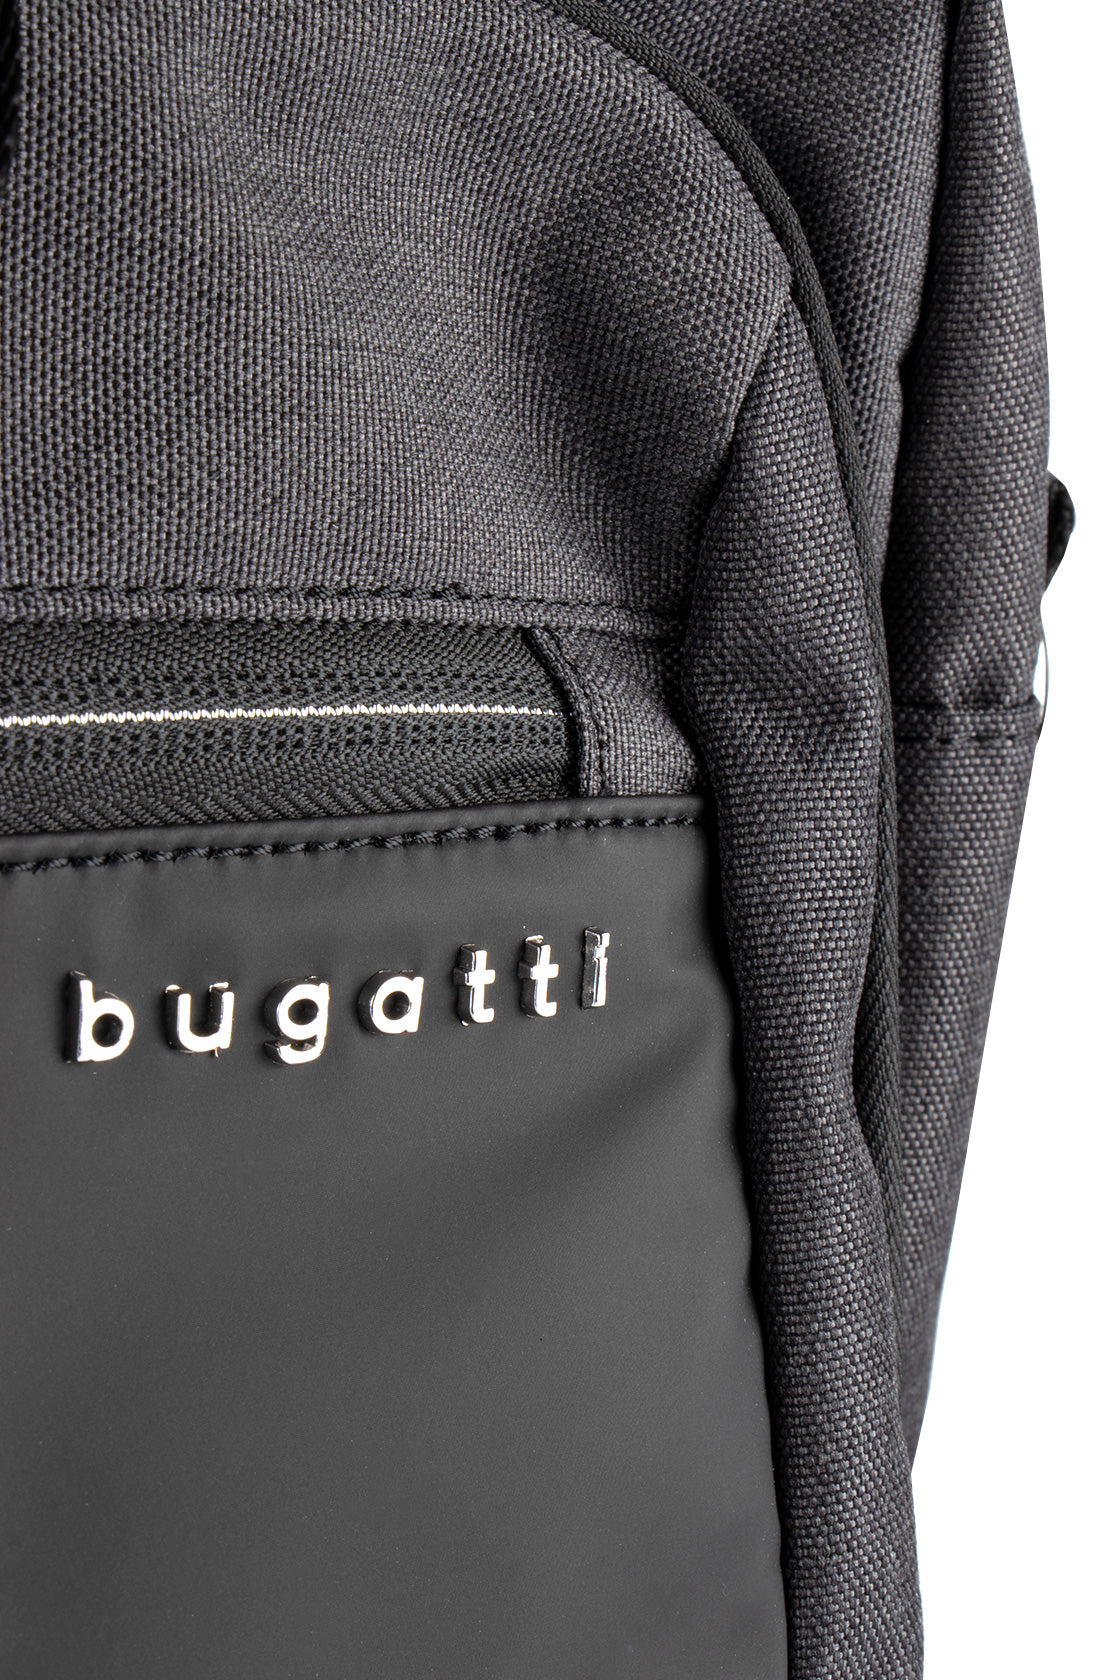 Bugatti Sera Shoulder Bag Anthracite